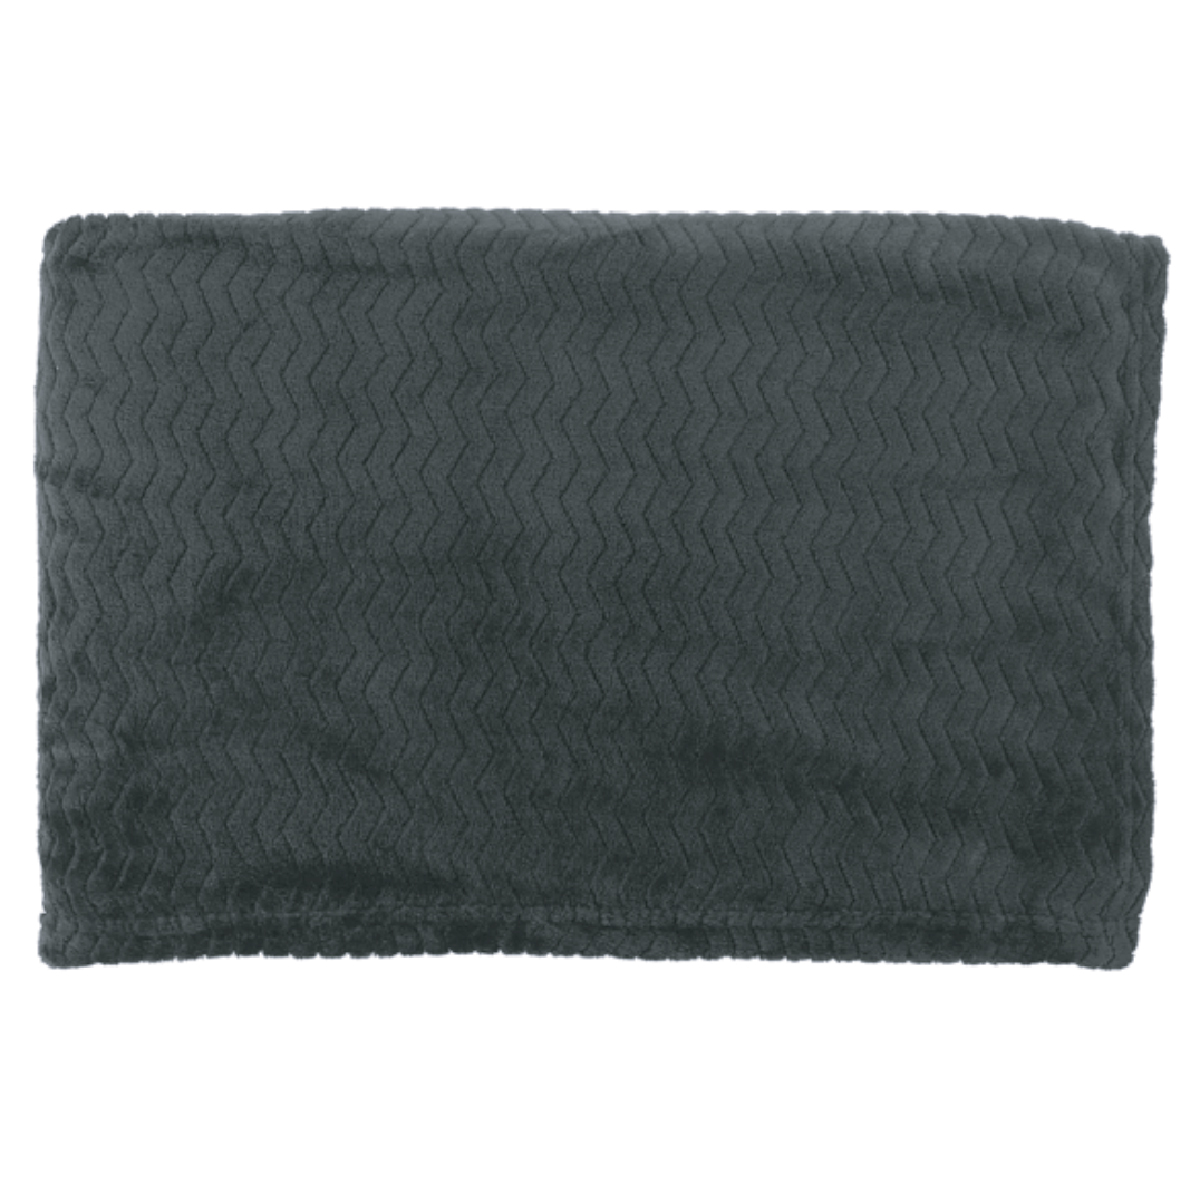 Black Microfiber Wave Blanket